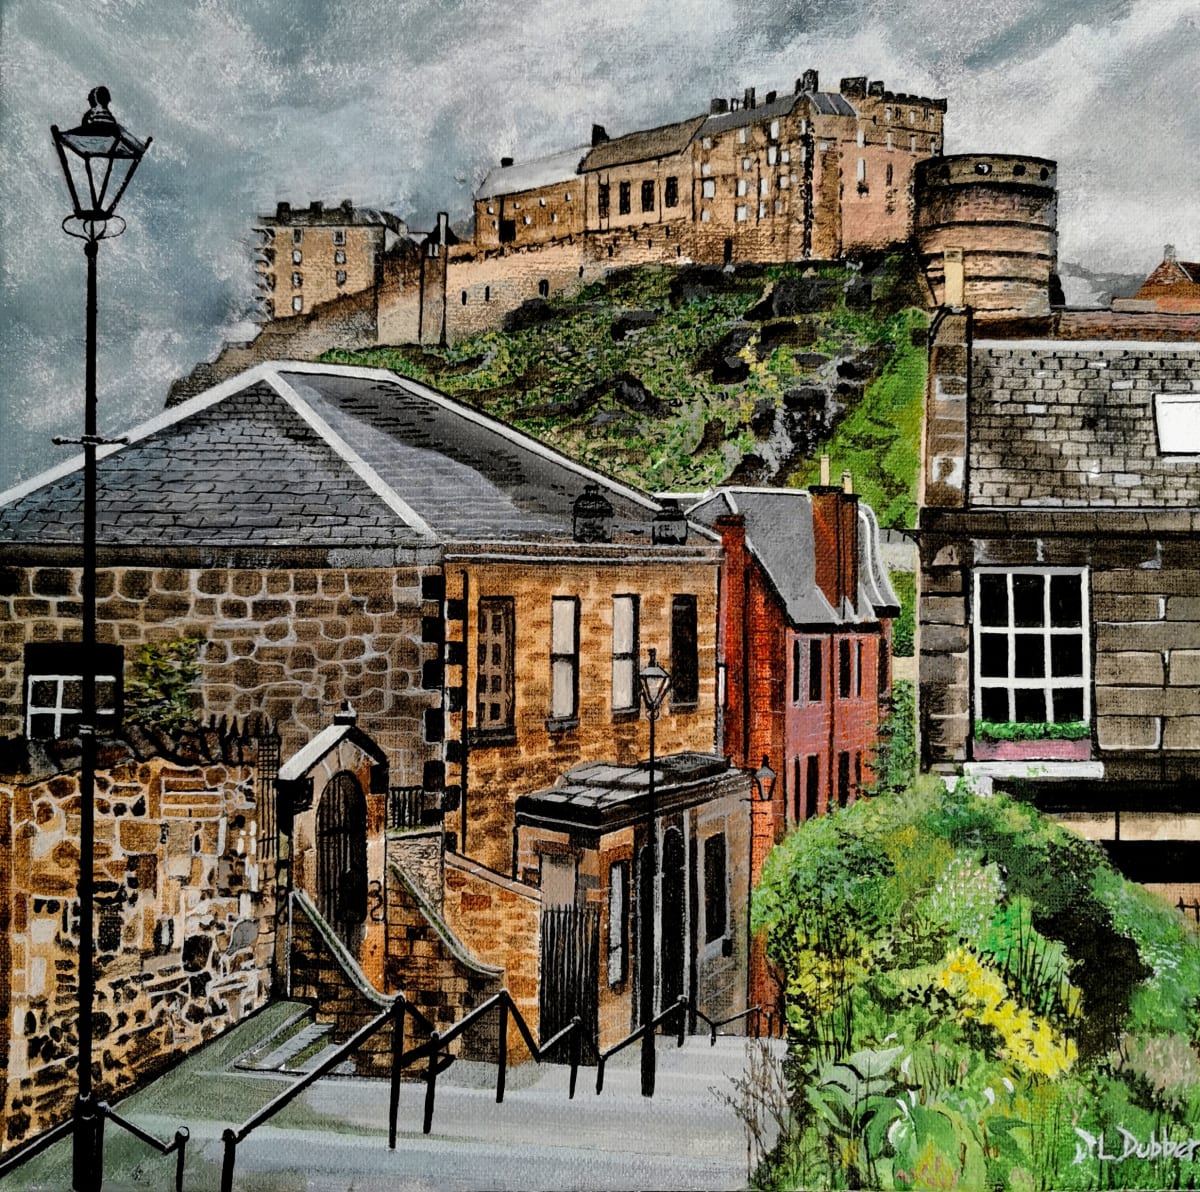 Edinburgh castle from the Steps by Lois Dubber 